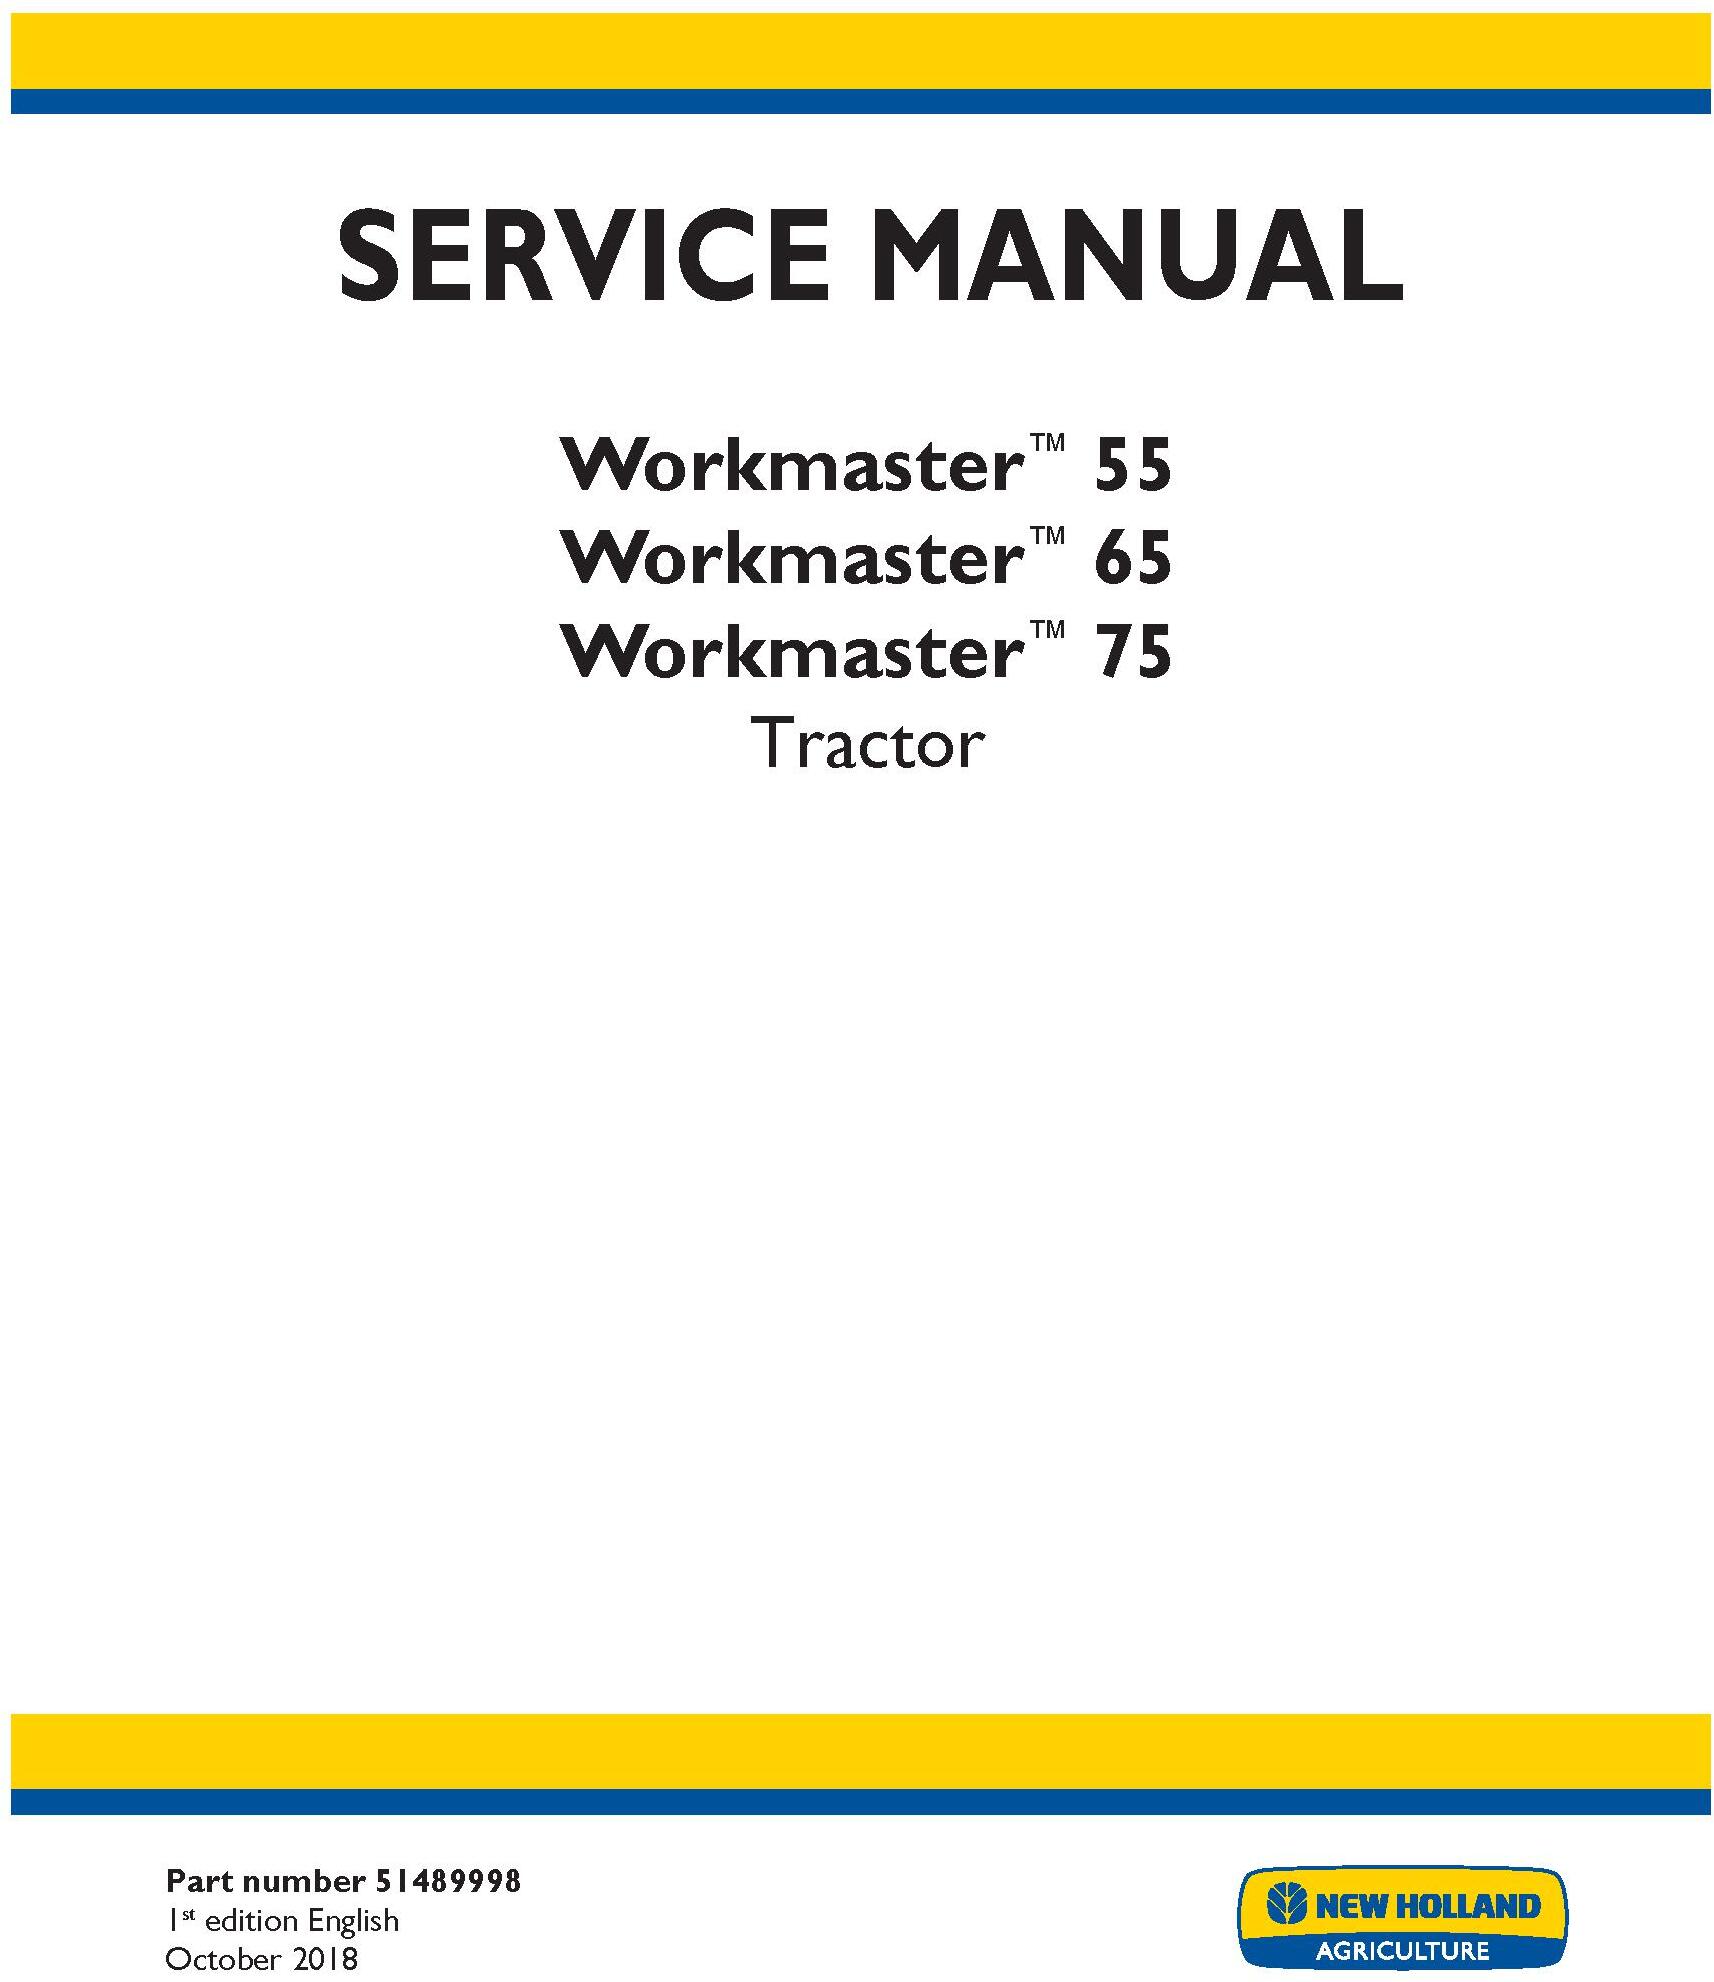 New Holland Workmaster 55, Workmaster 65, Workmaster 75 Tractor Service Manual - 19517